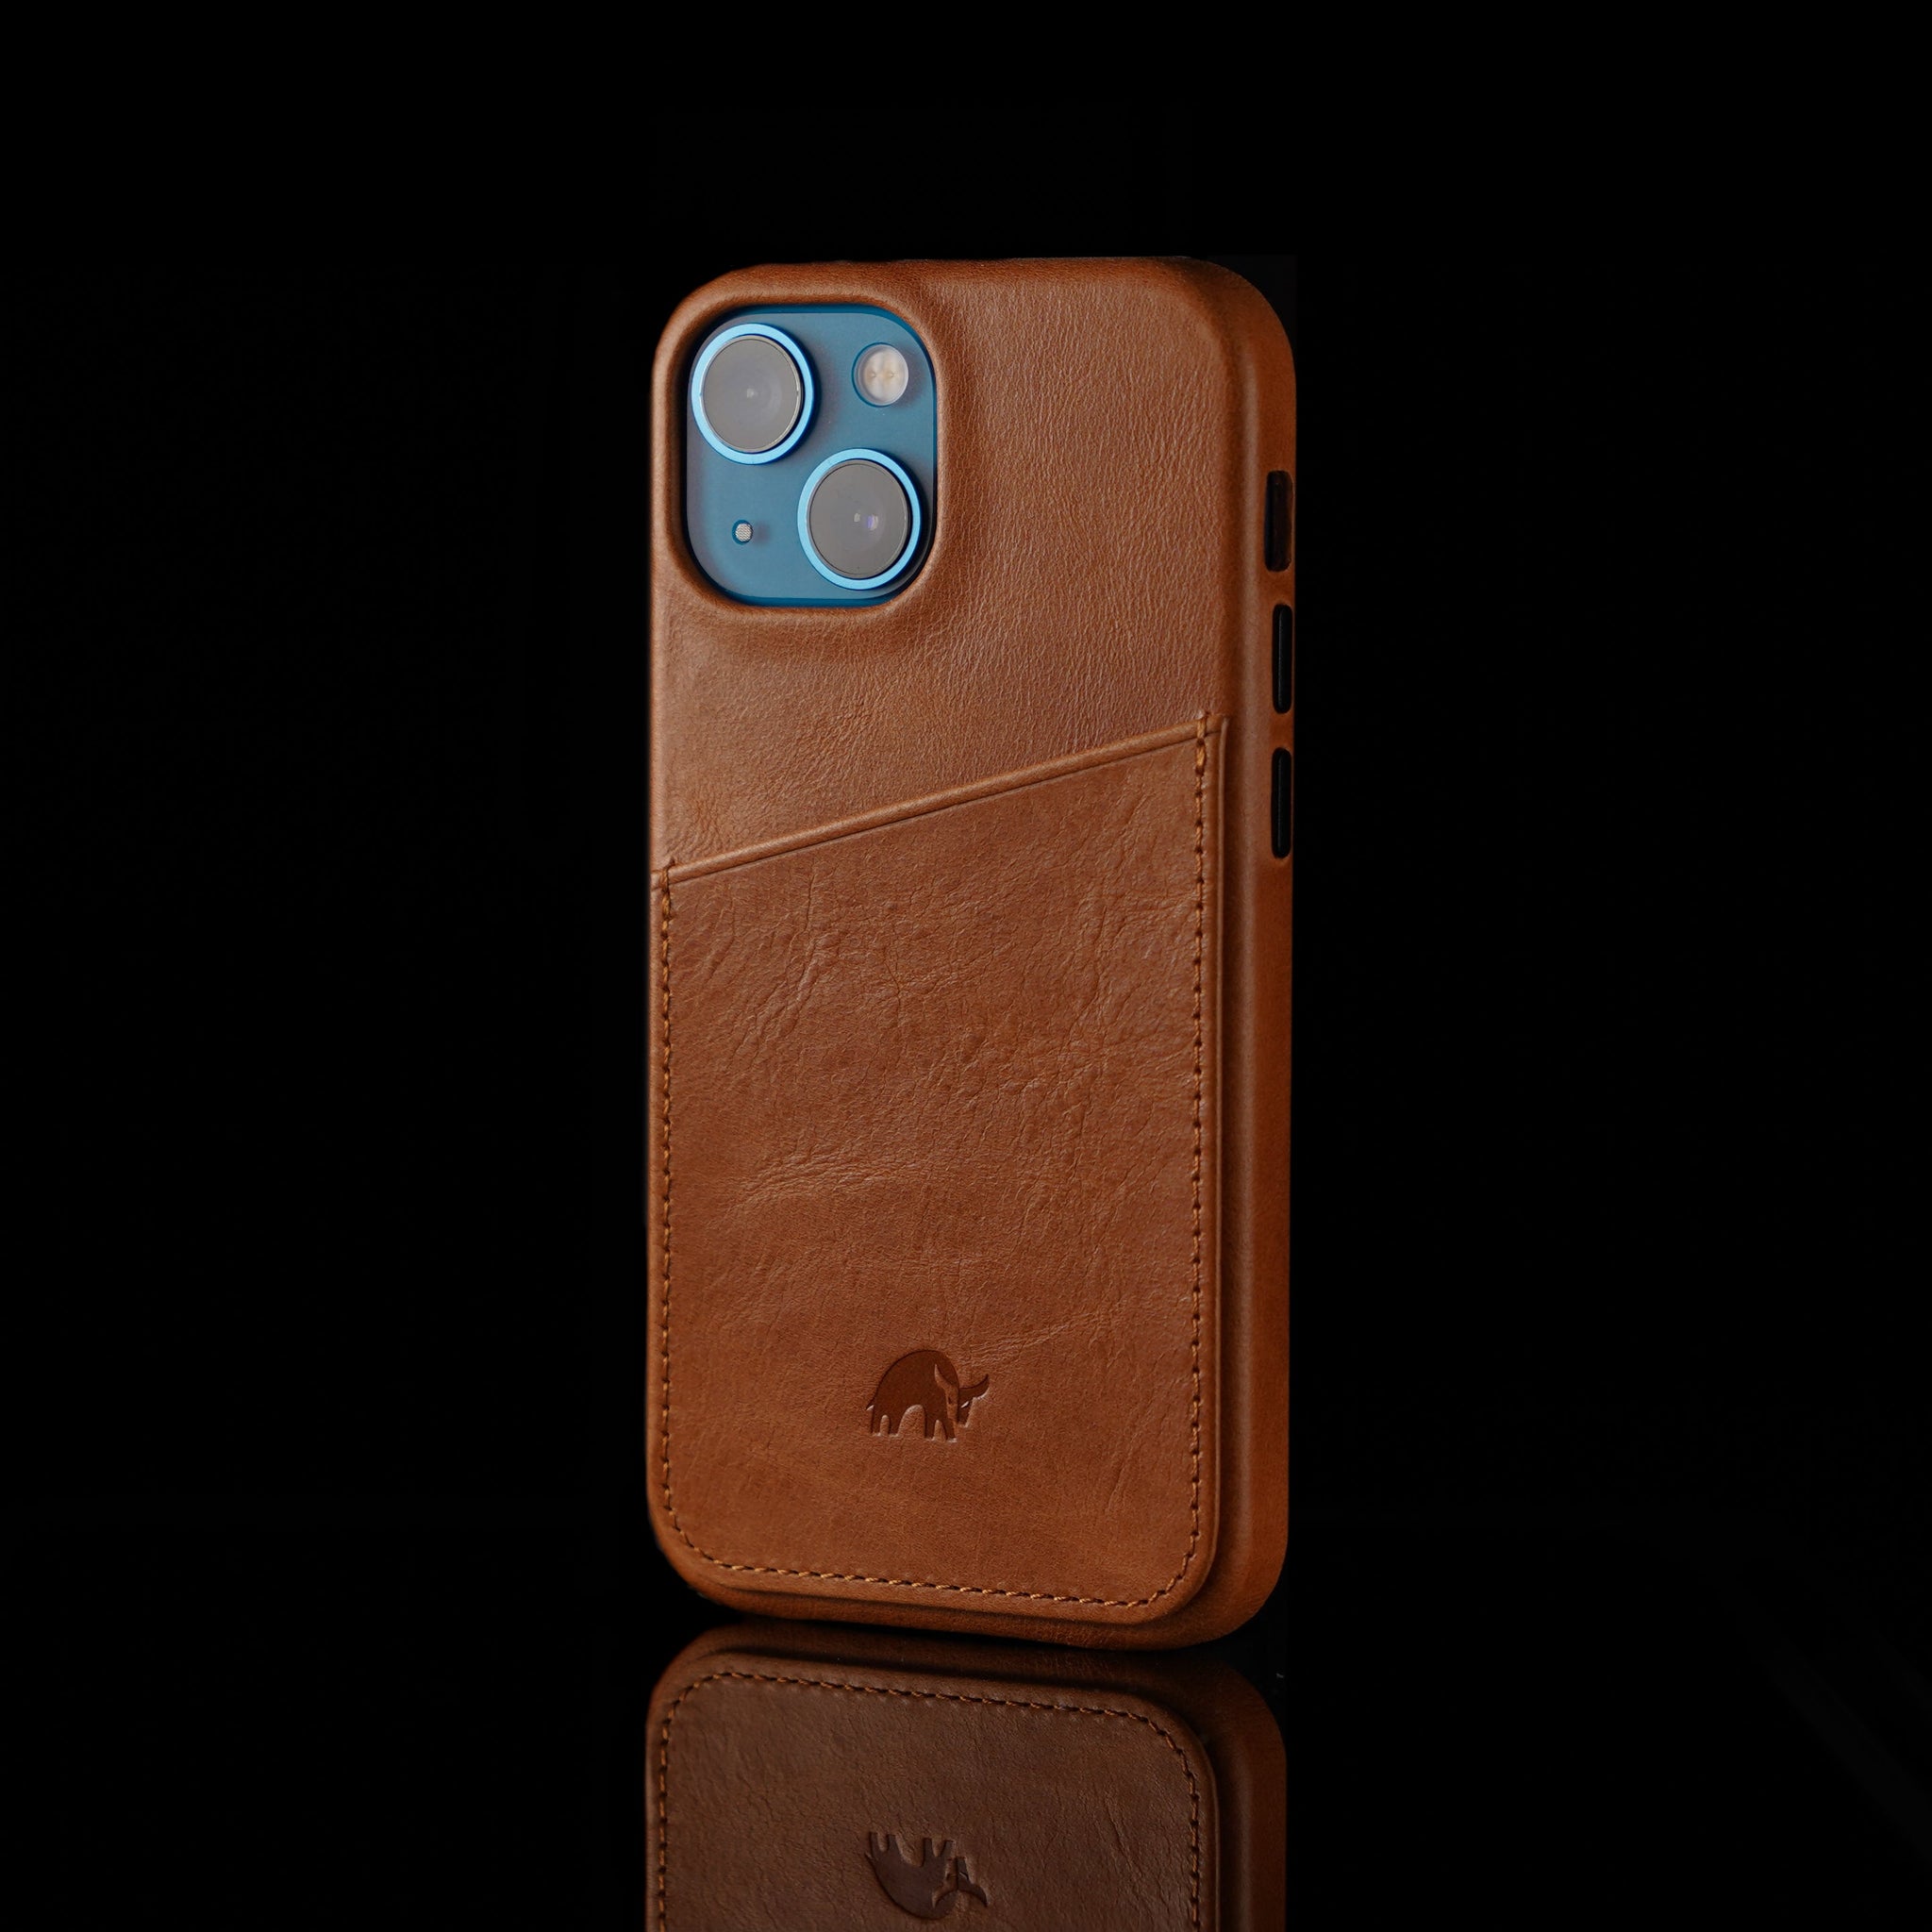 Portfolio iPhone Cases - Sienna by Bullstrap